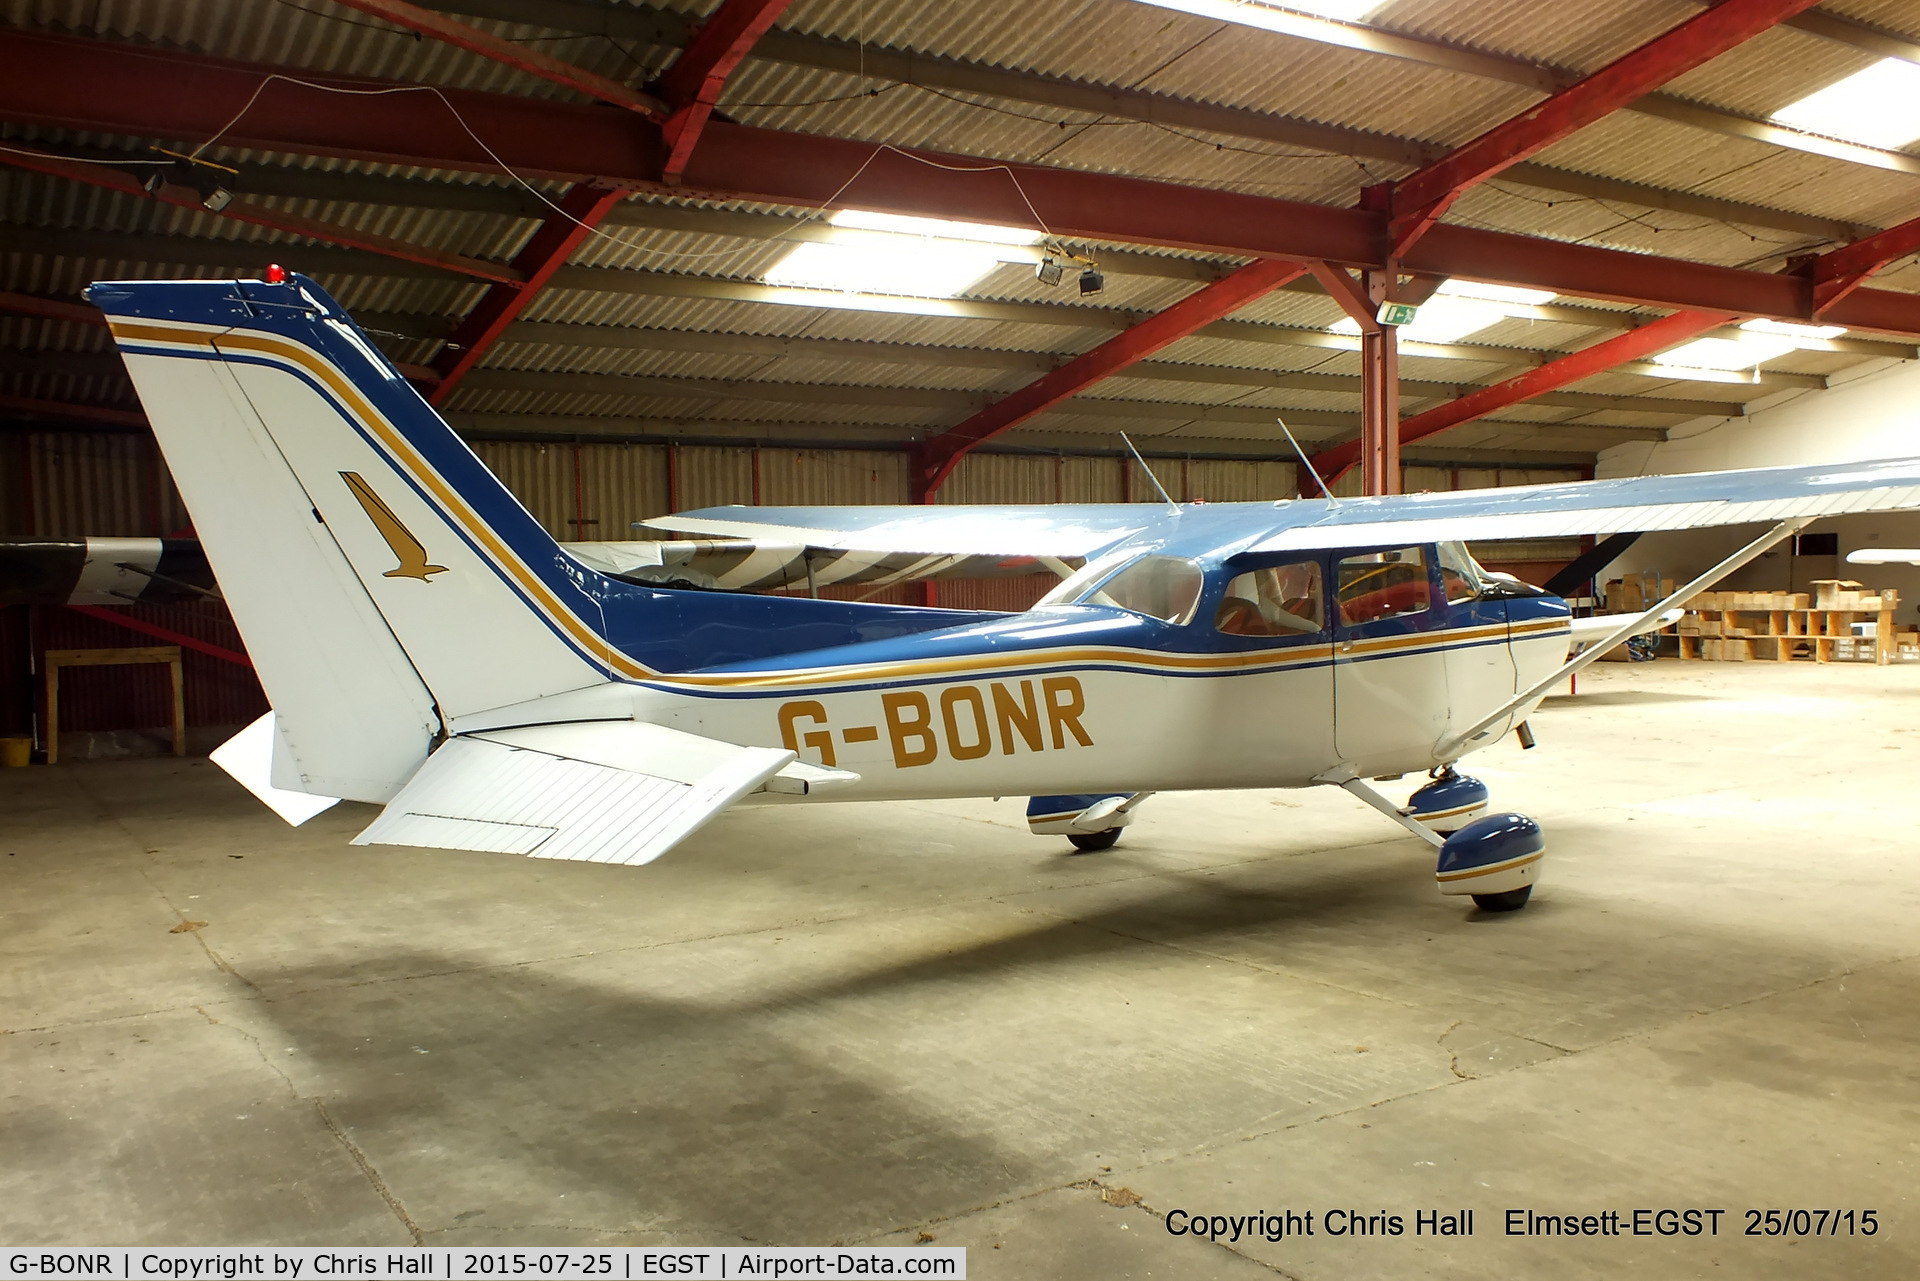 G-BONR, 1977 Cessna 172N Skyhawk C/N 172-68164, at Elmsett Airfield